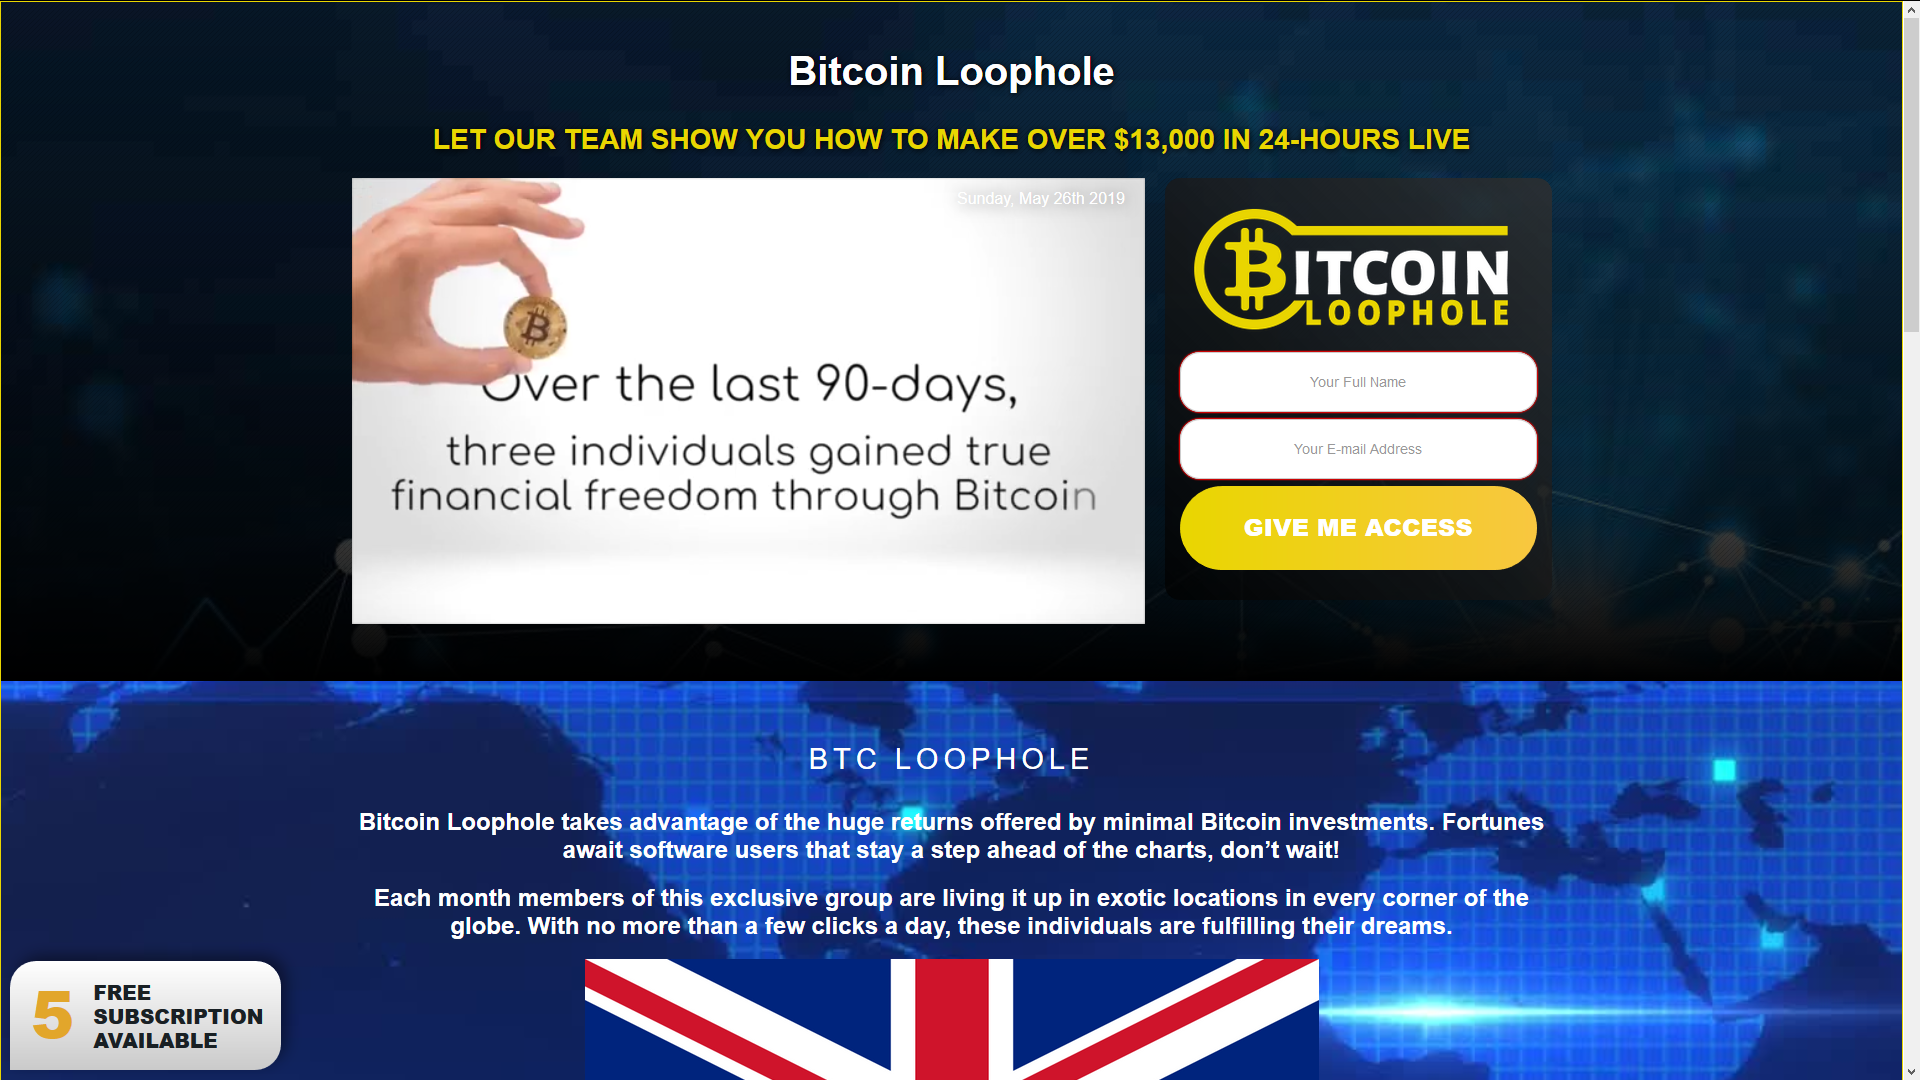 has anyone used bitcoin loophole